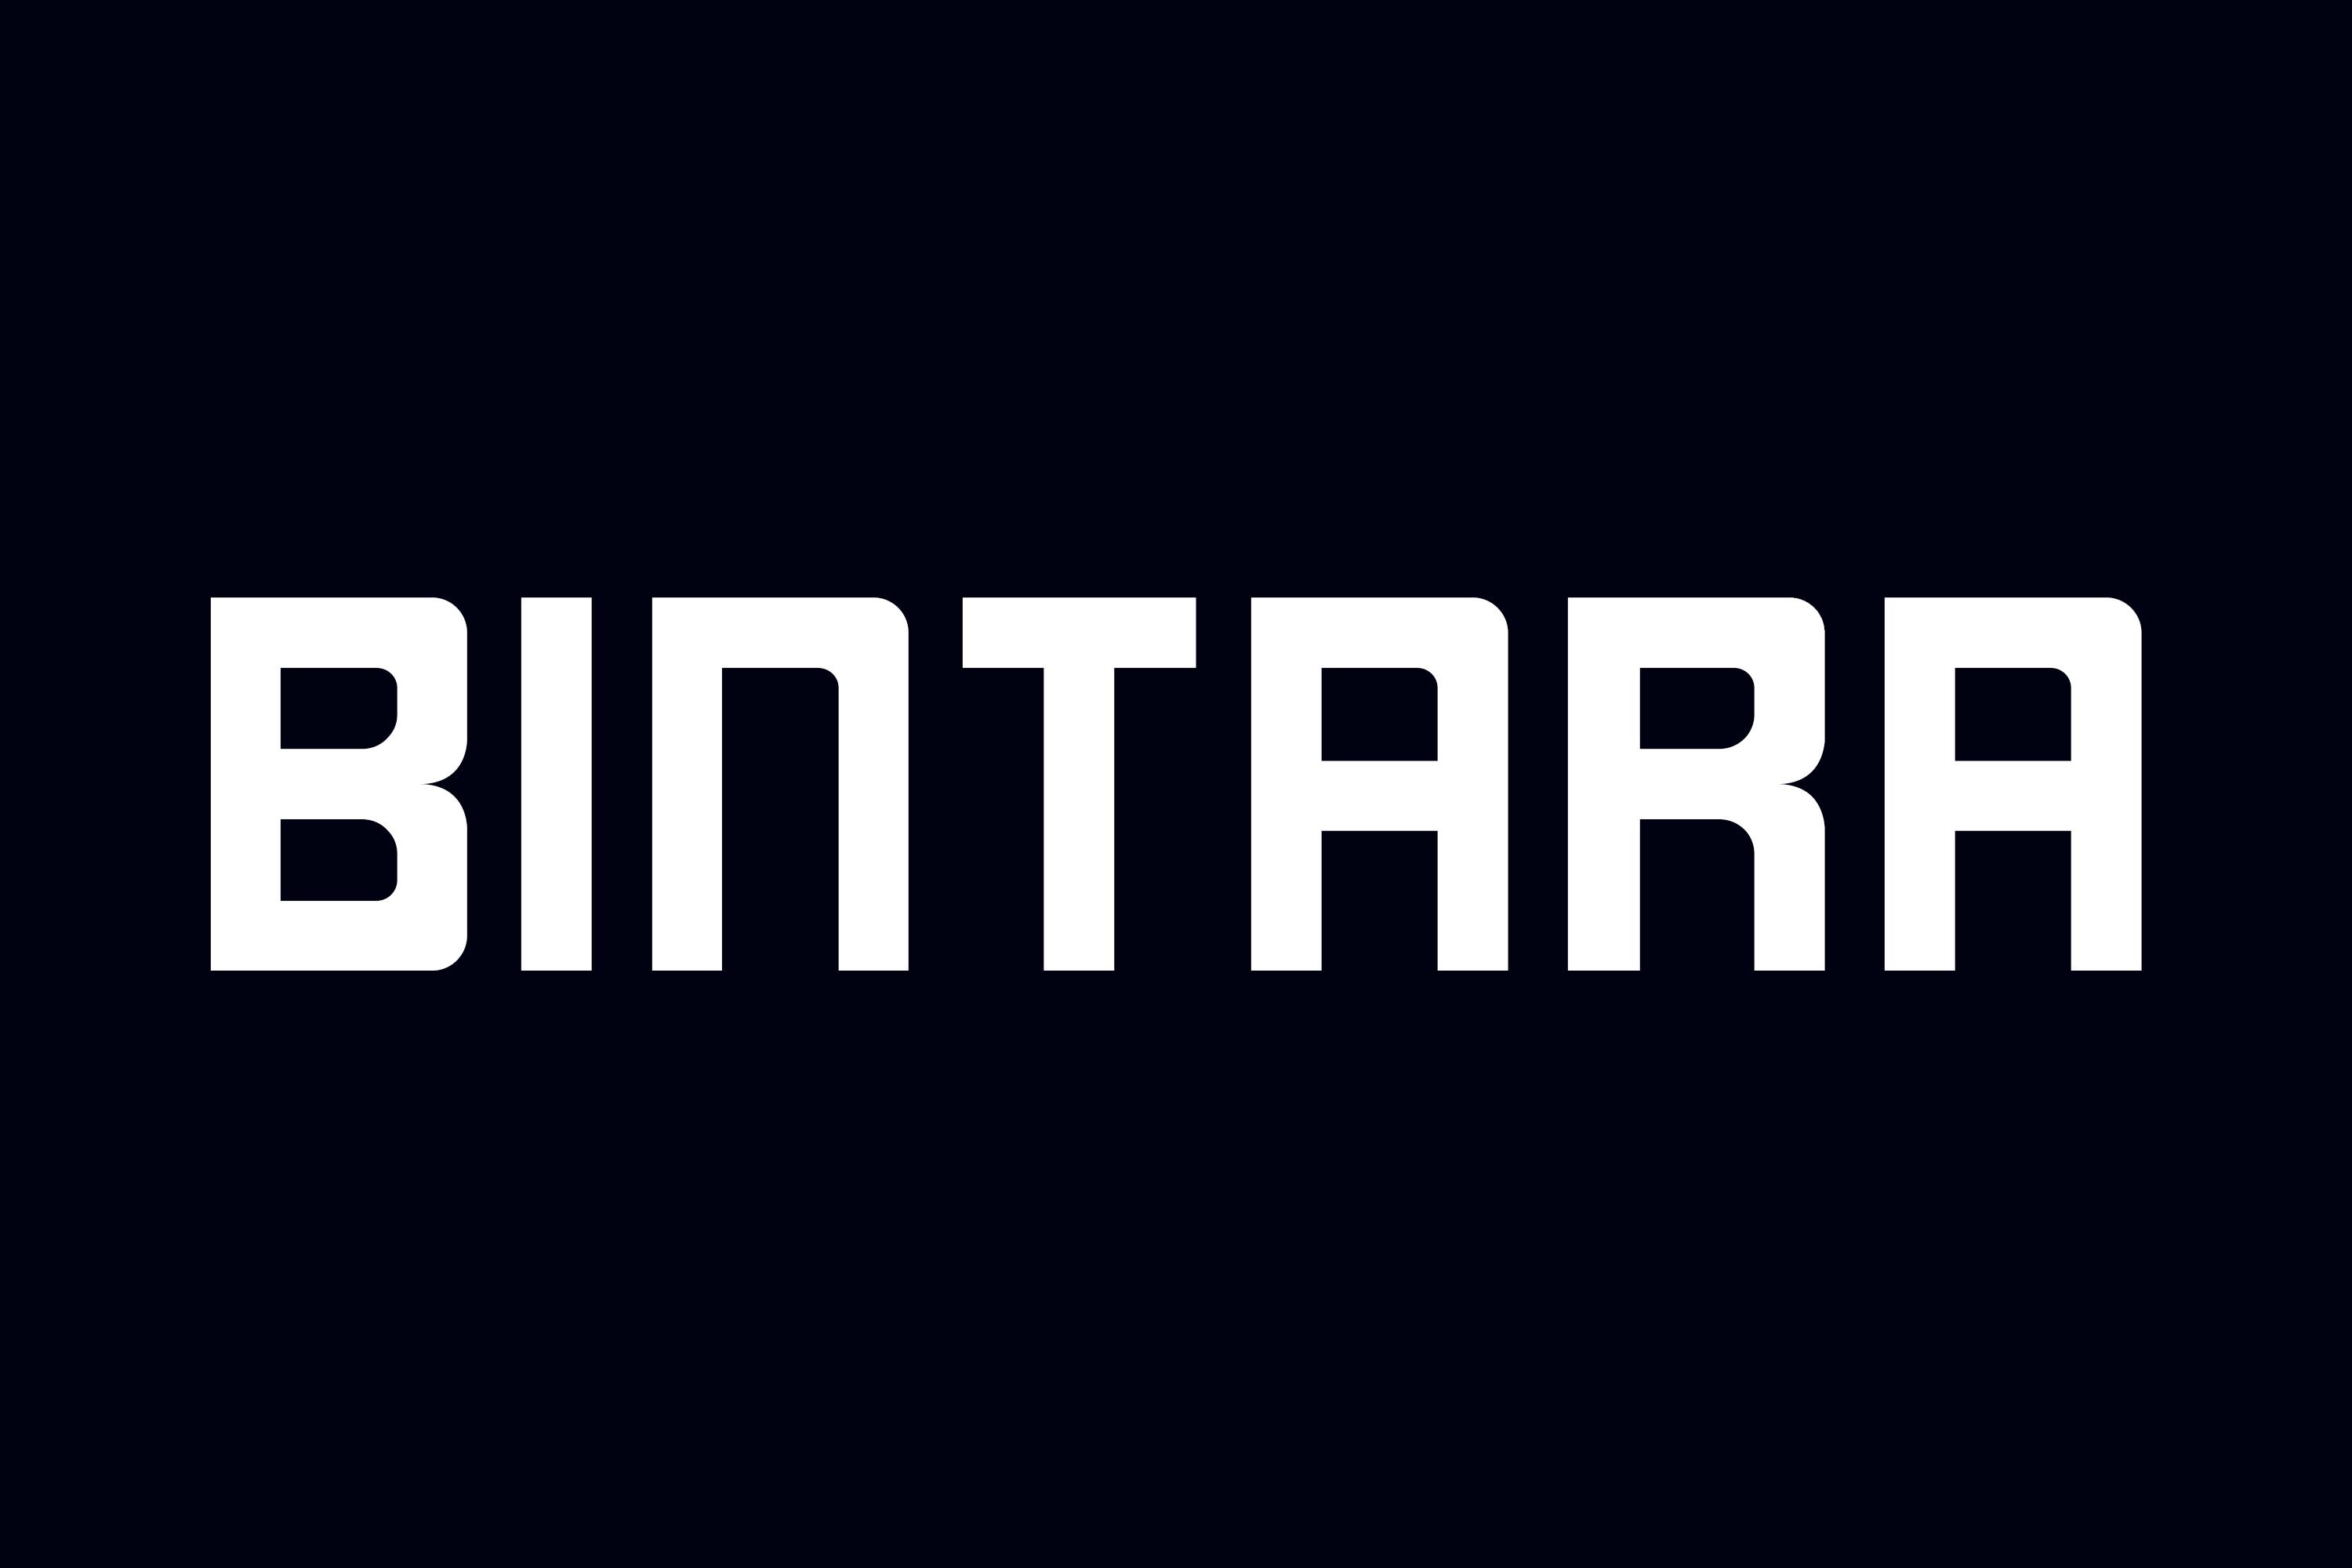 Bintara Font